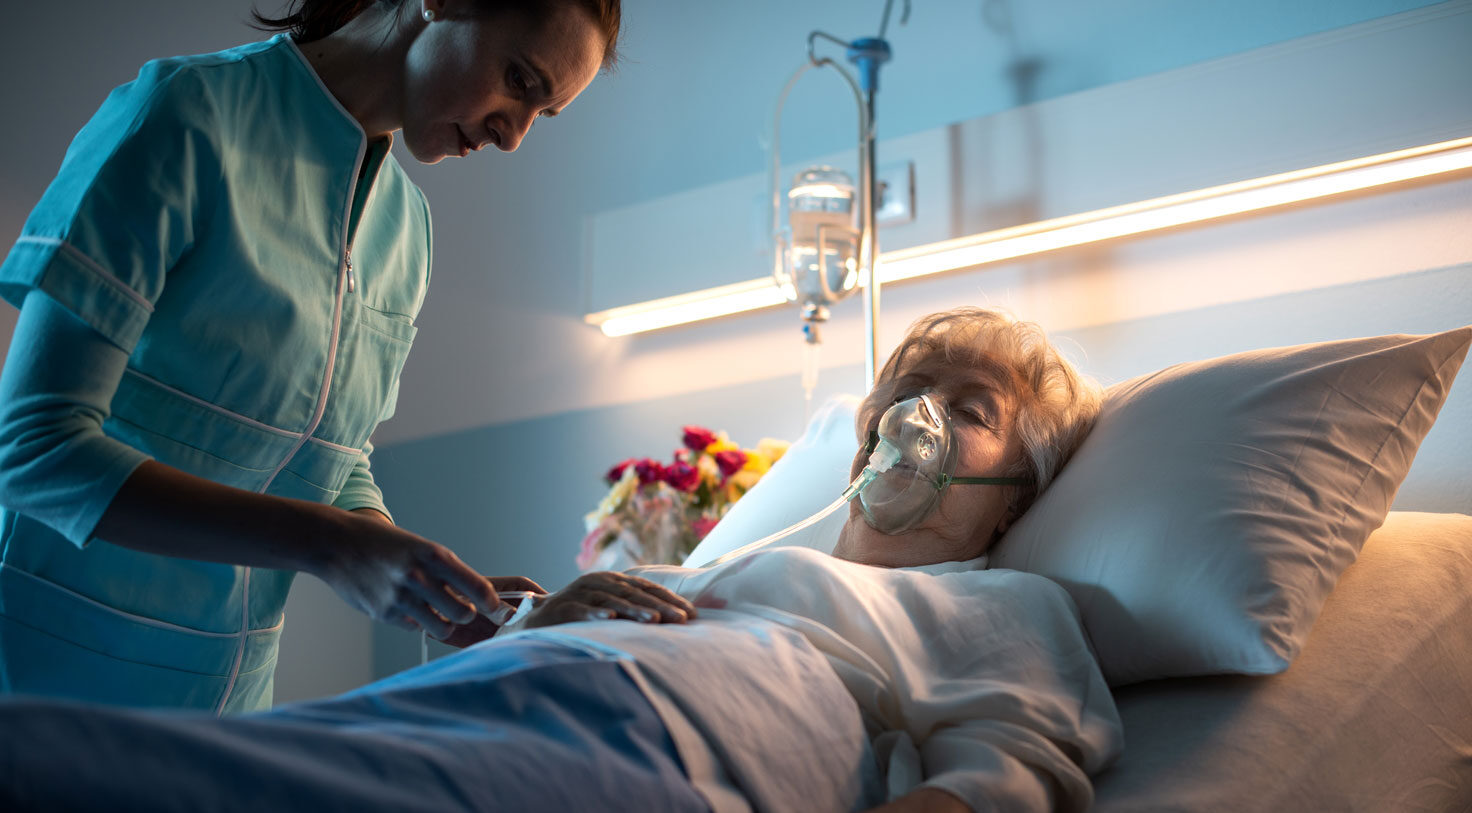 Hospice care nurse in blue scrubs checking an unconscious bedridden elderly patient with an oxygen mask